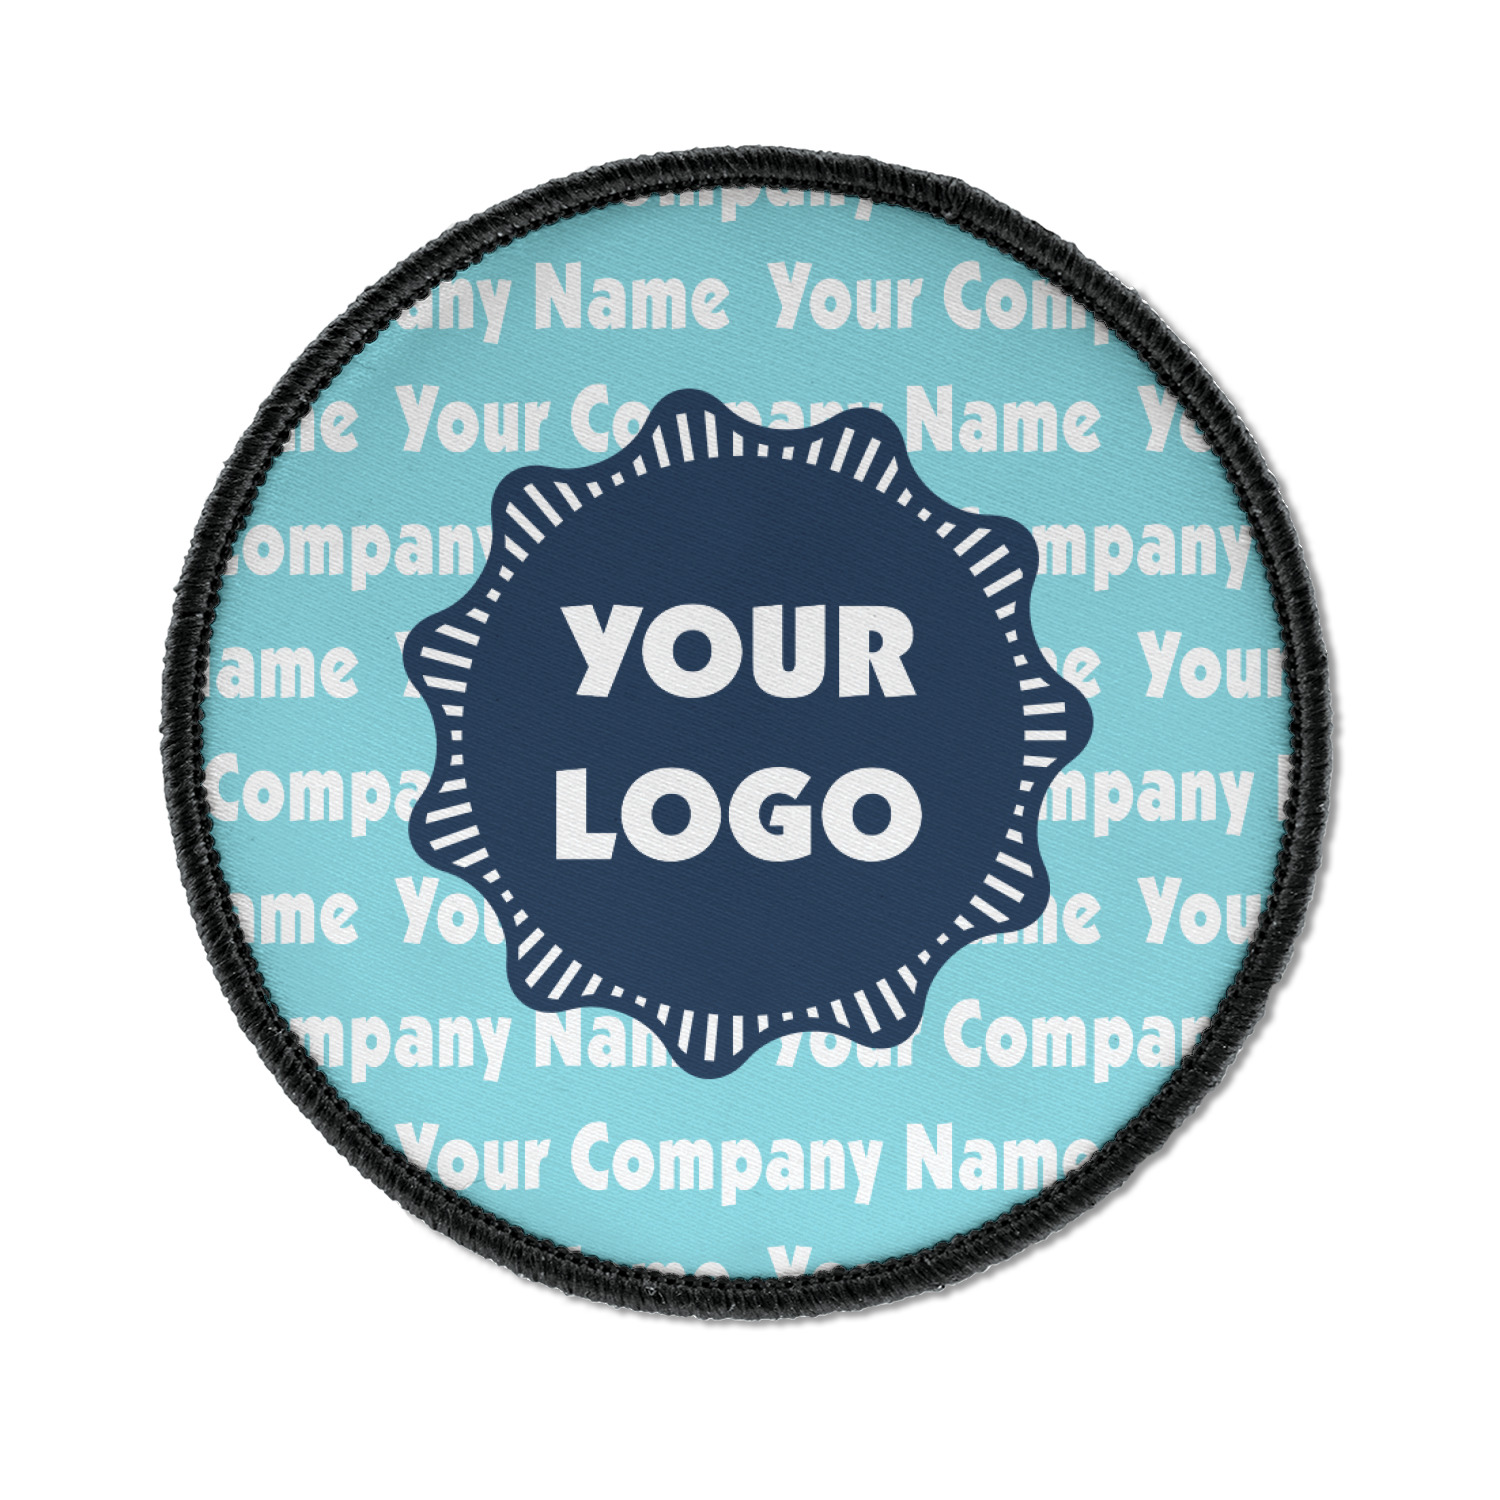 Logo & Company Name Design Custom Iron on Patches